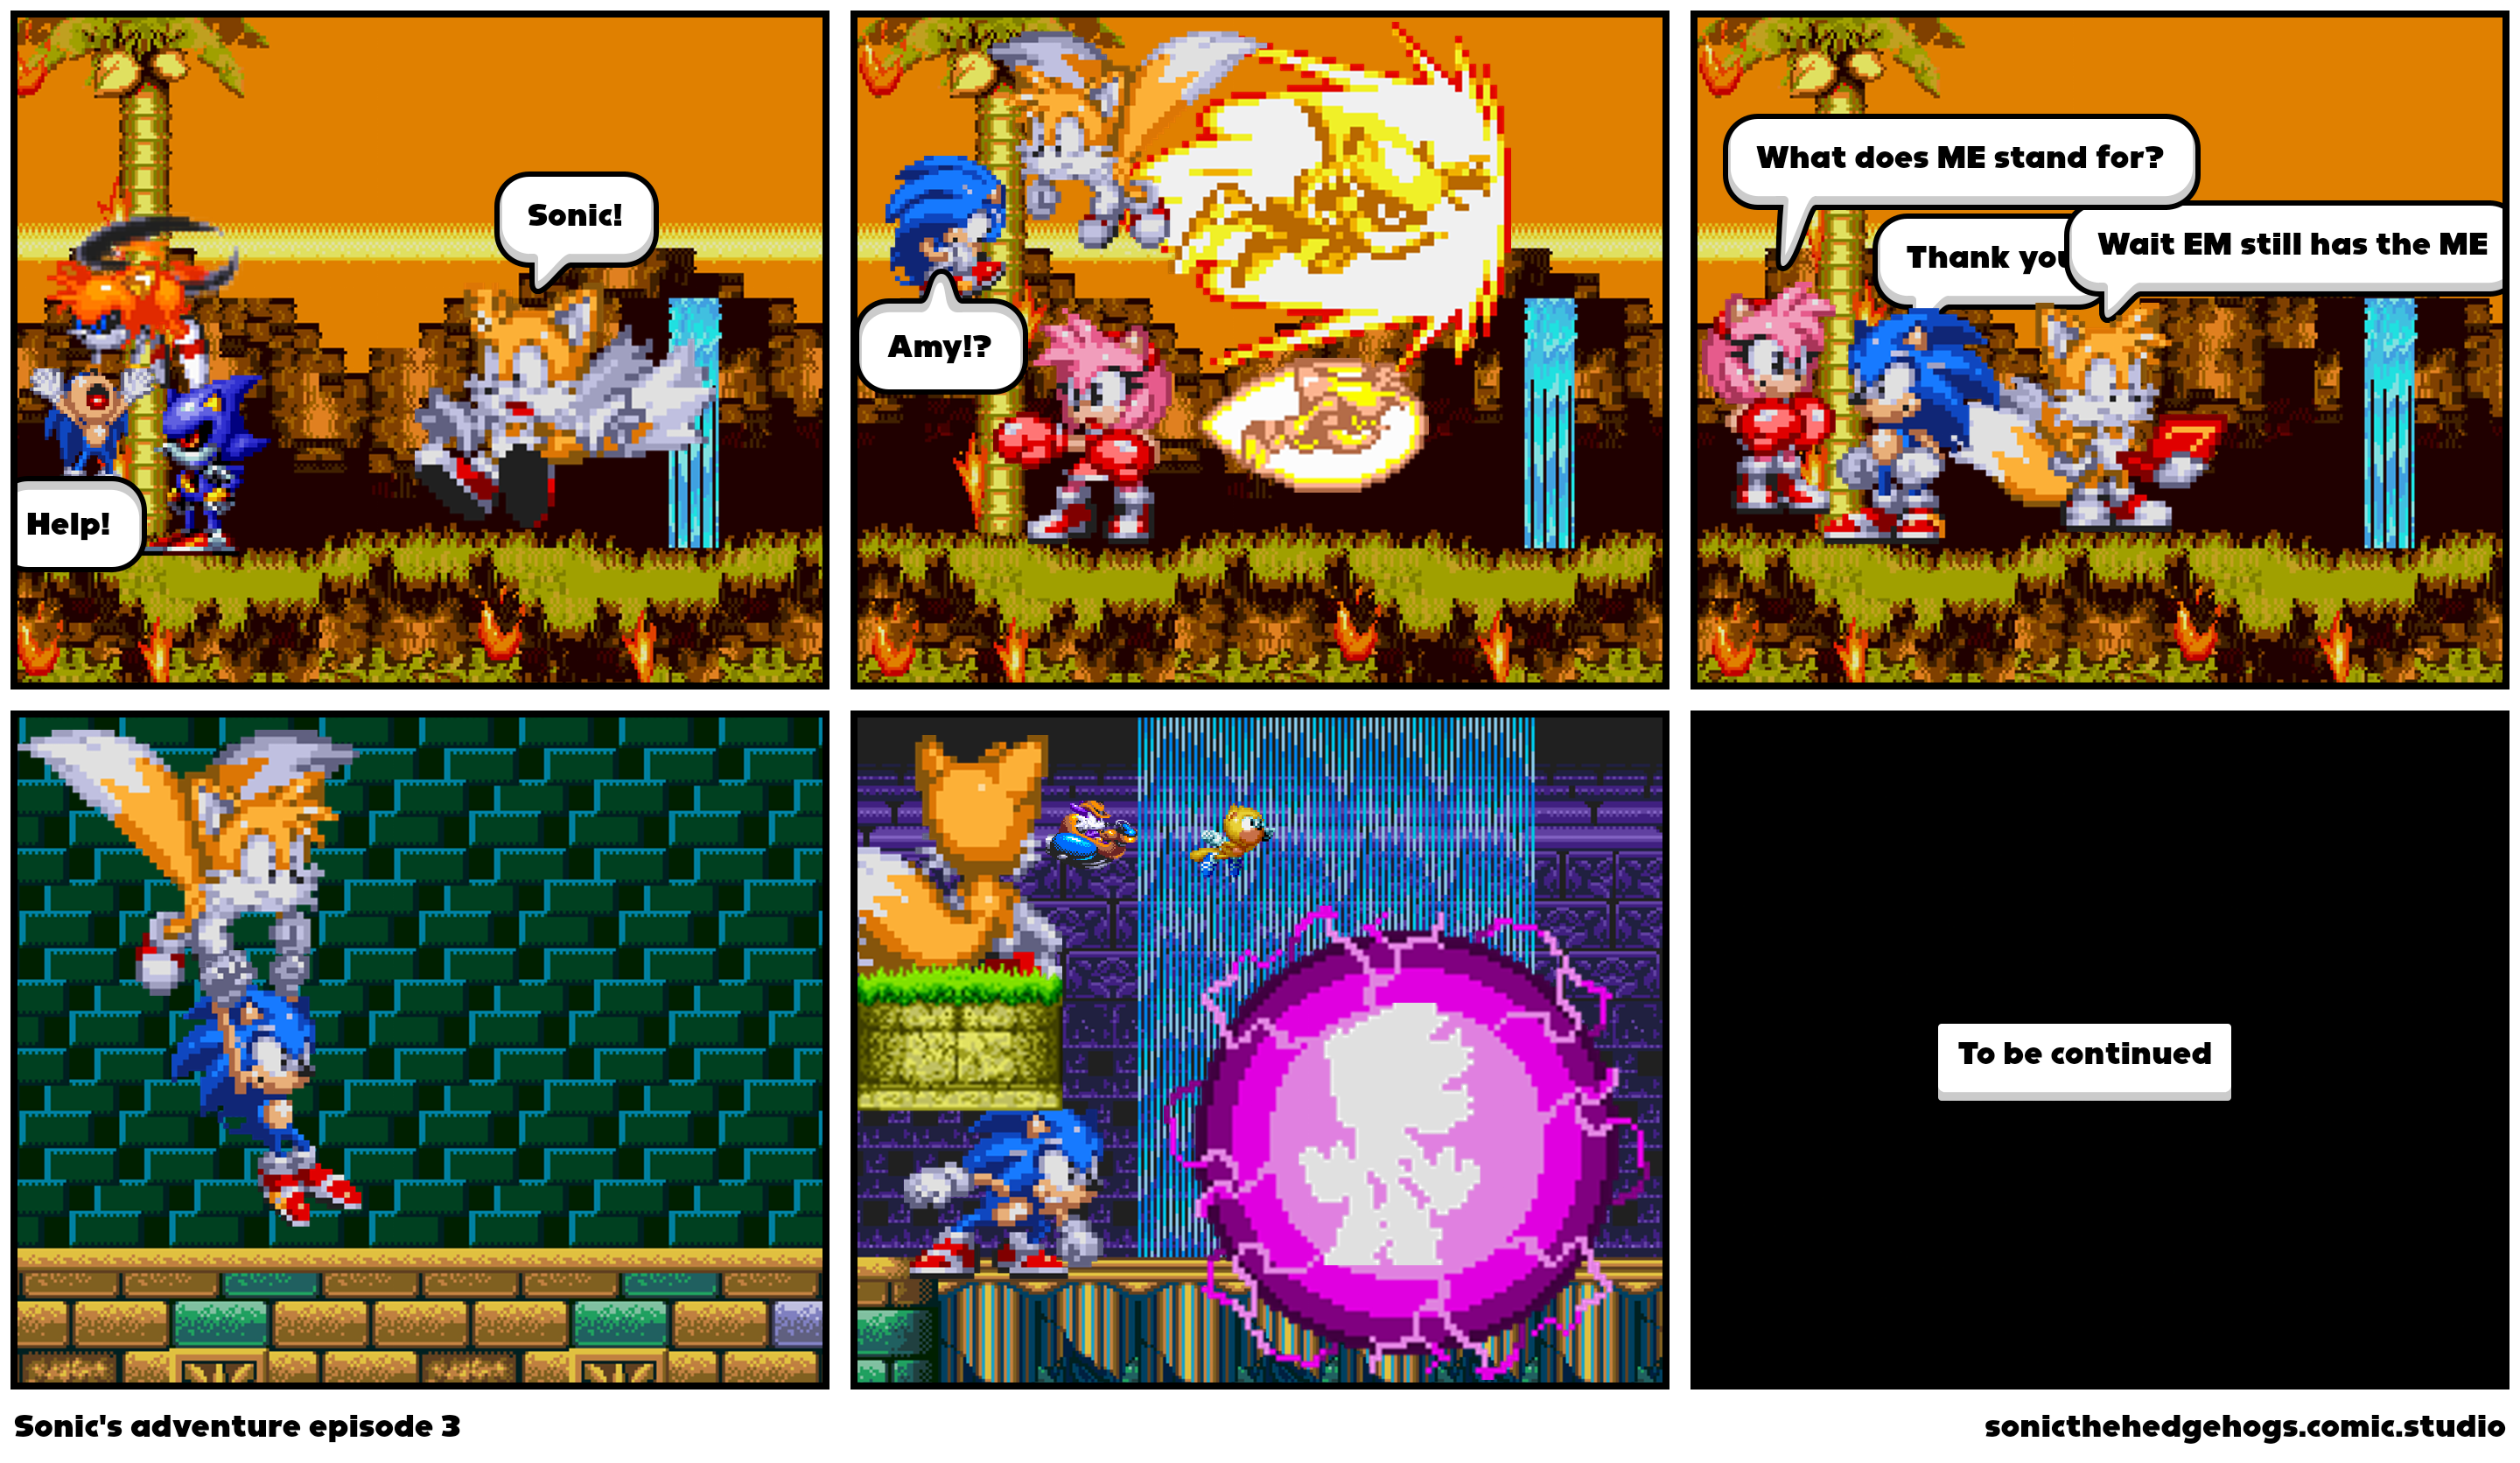 Sonic's adventure episode 3